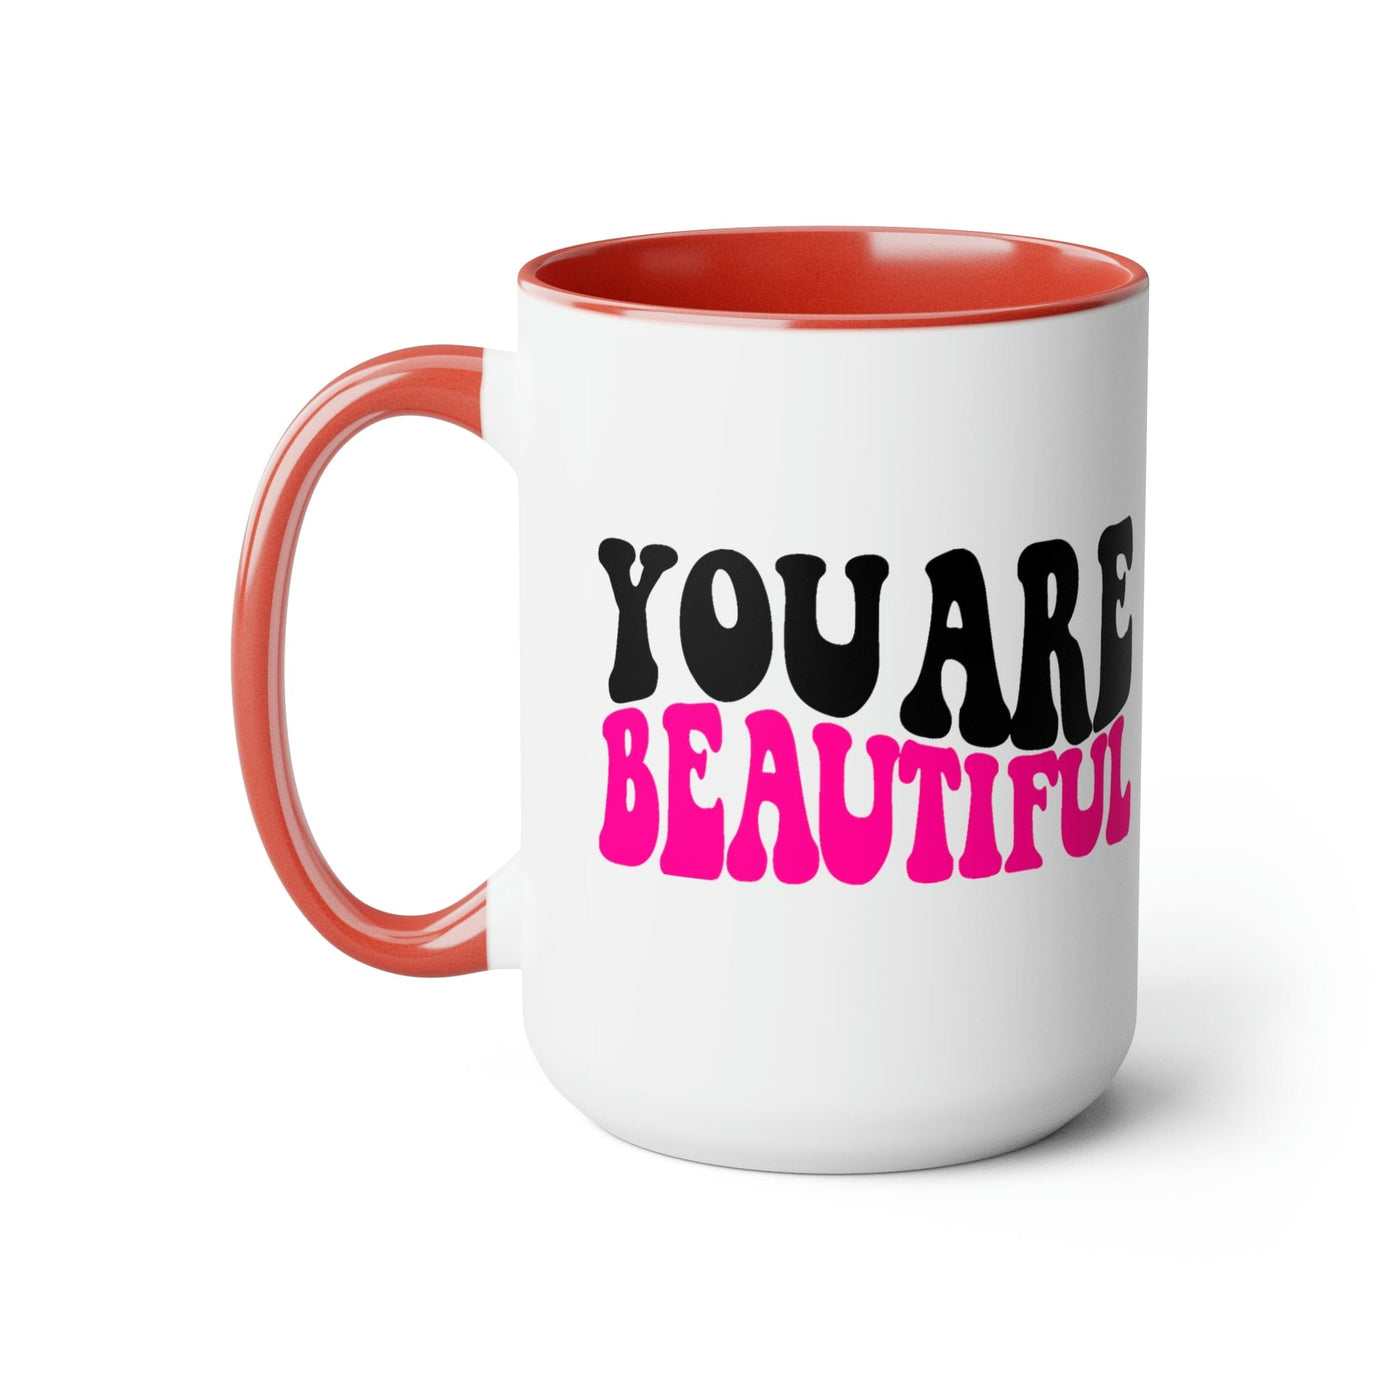 Two-tone Accent Ceramic Coffee Mug 15oz You Are Beautiful Retro Wavy Pink Black